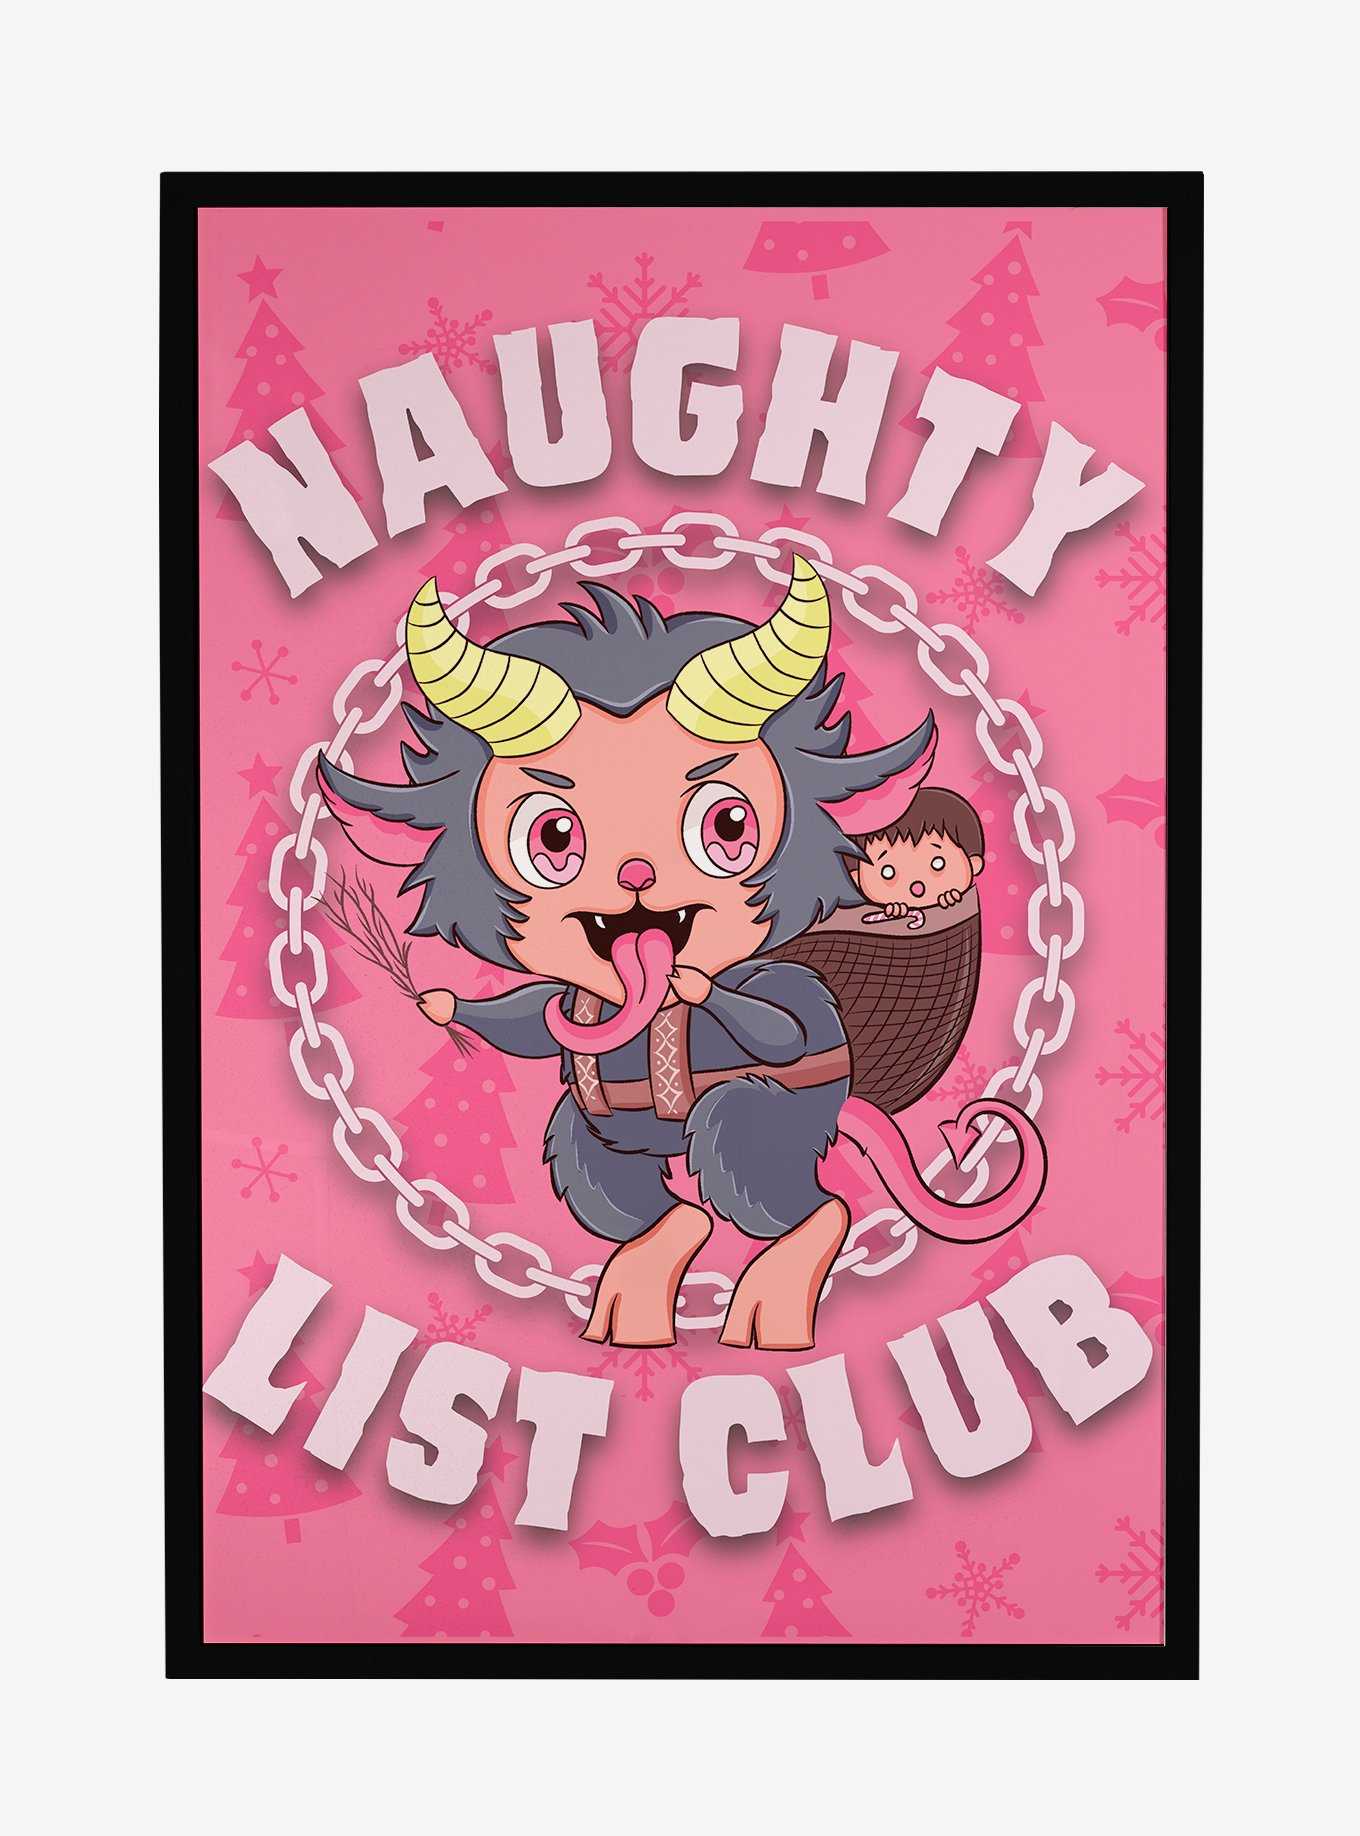 Krampus Naughty List Club Framed Poster, , hi-res